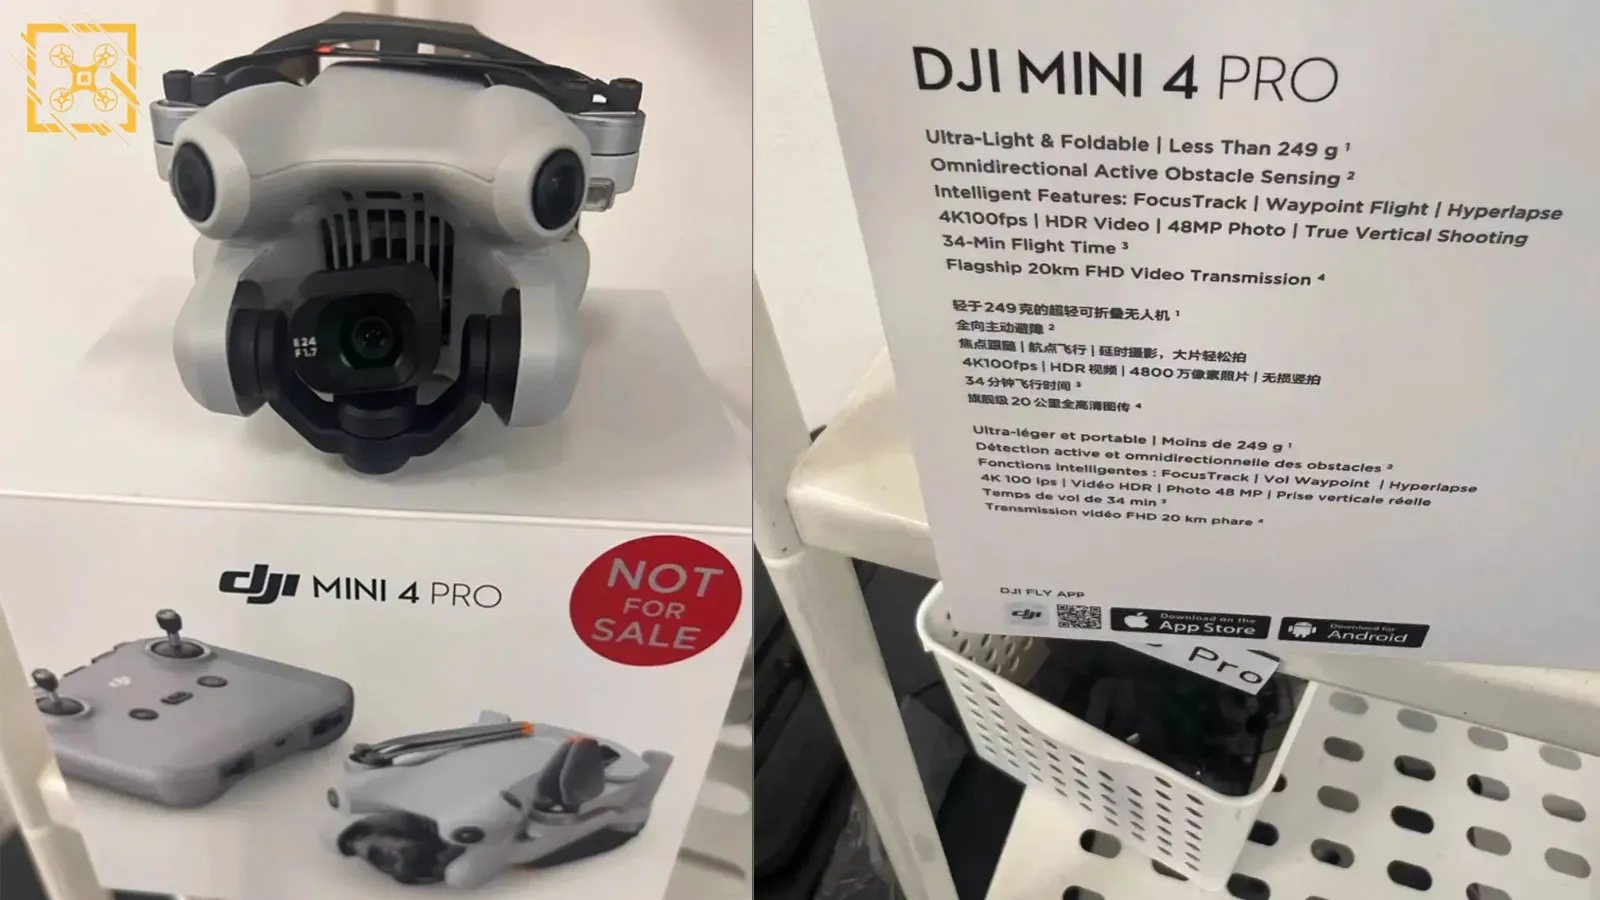 New DJI Mini 4 Pro Drone Offers Obstacle Sensing & Longer Battery Life